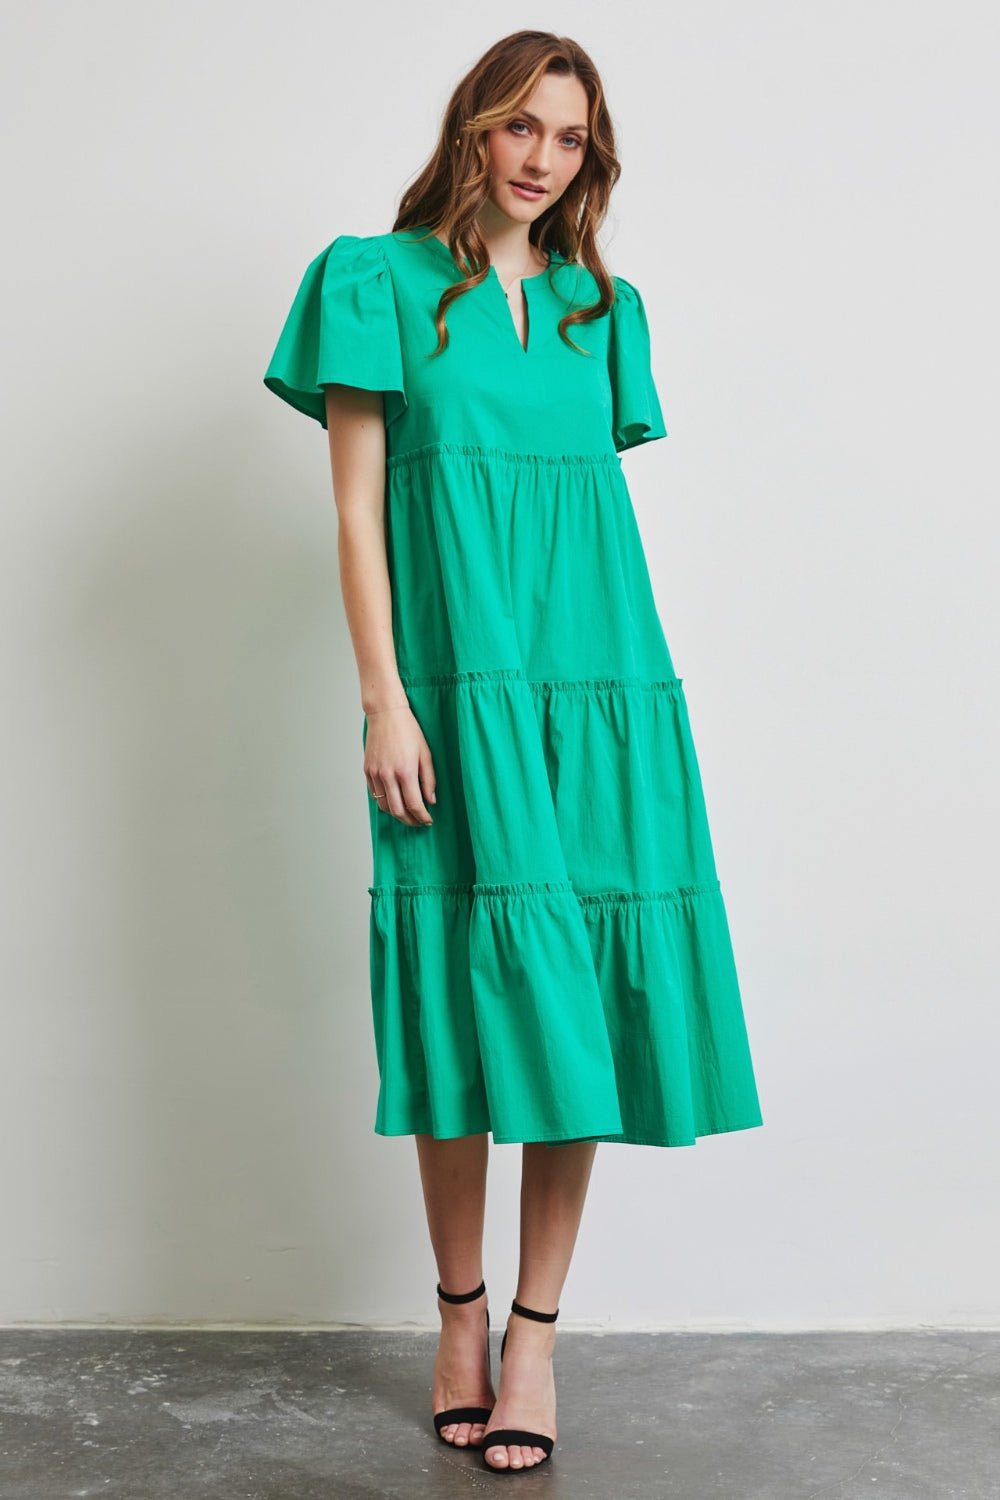 HEYSON Full Size Cotton Poplin Ruffled Tiered Midi Dress - Happily Ever Atchison Shop Co.